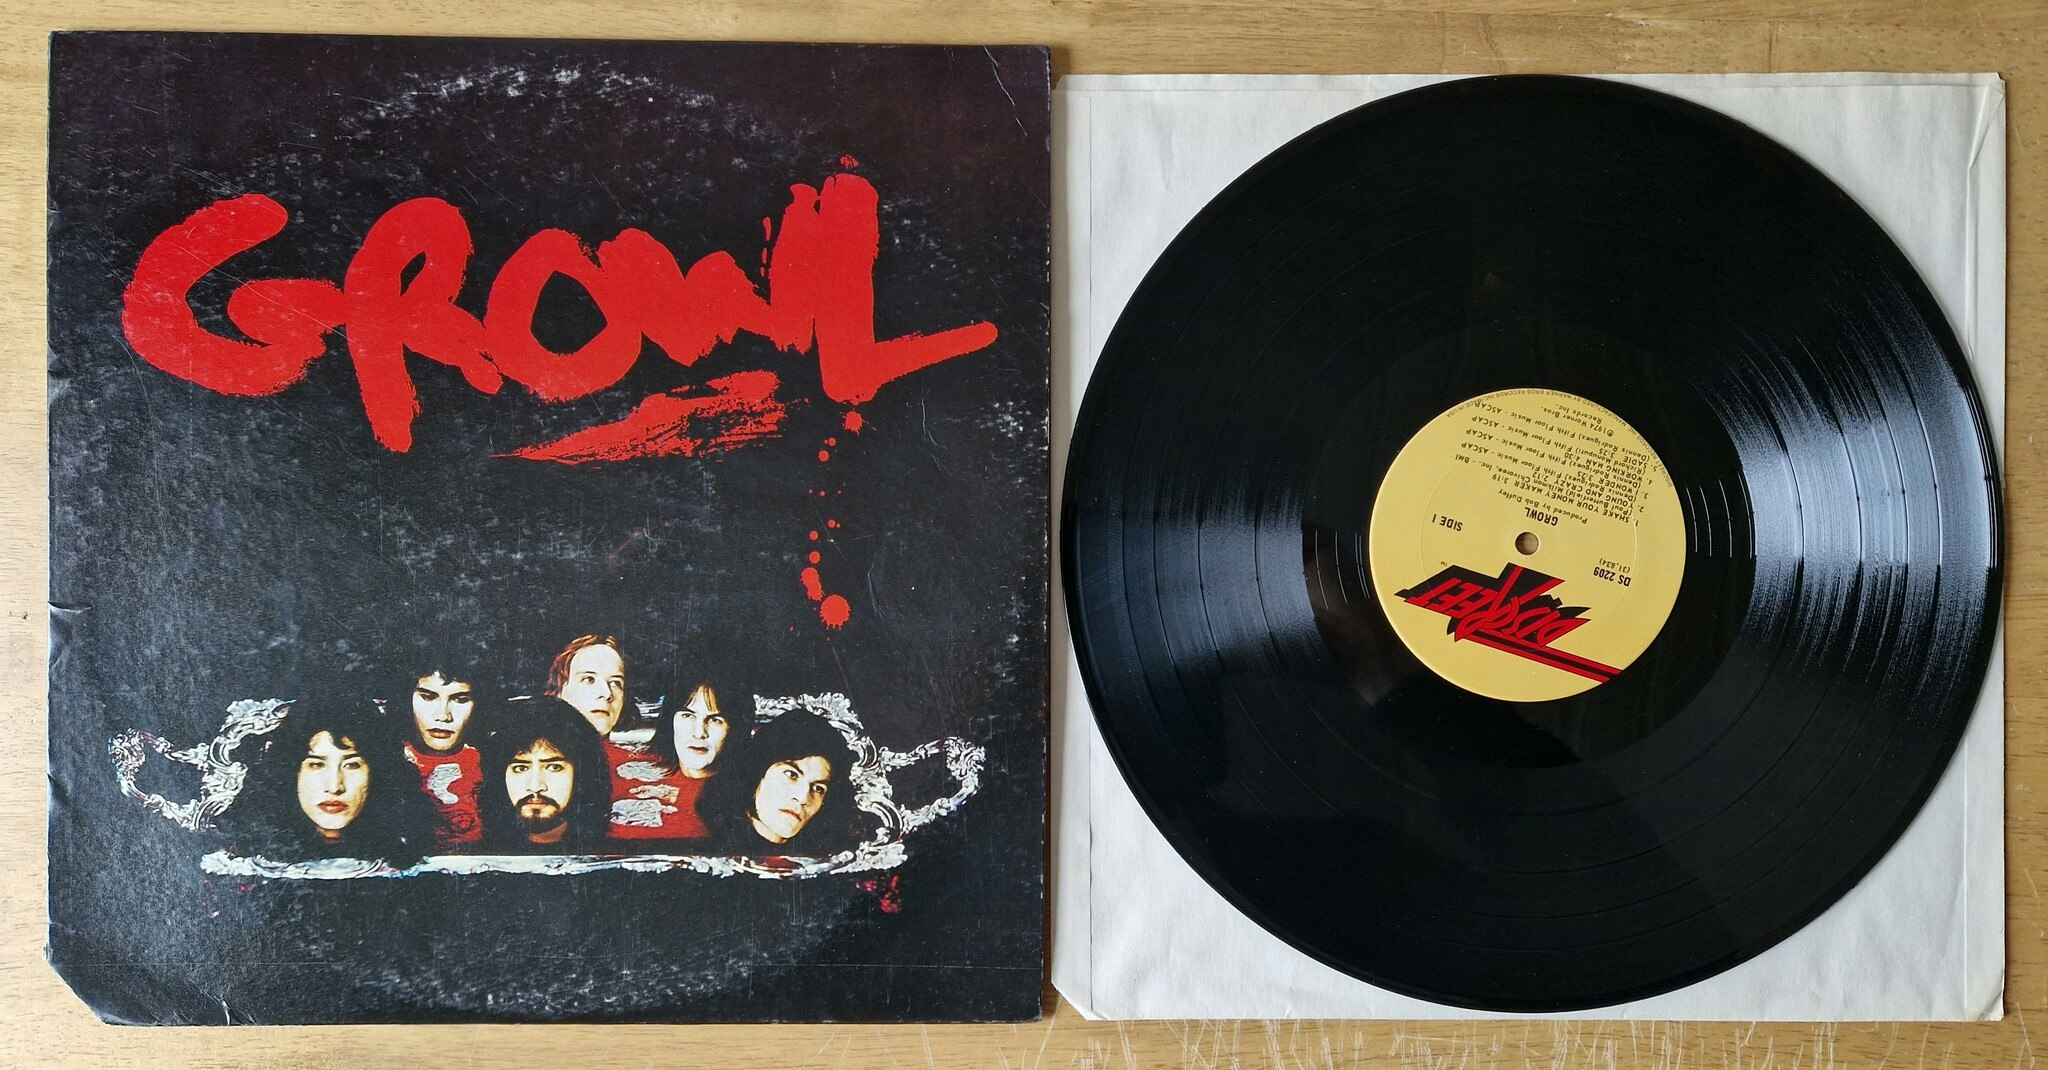 Growl, Growl. Vinyl LP